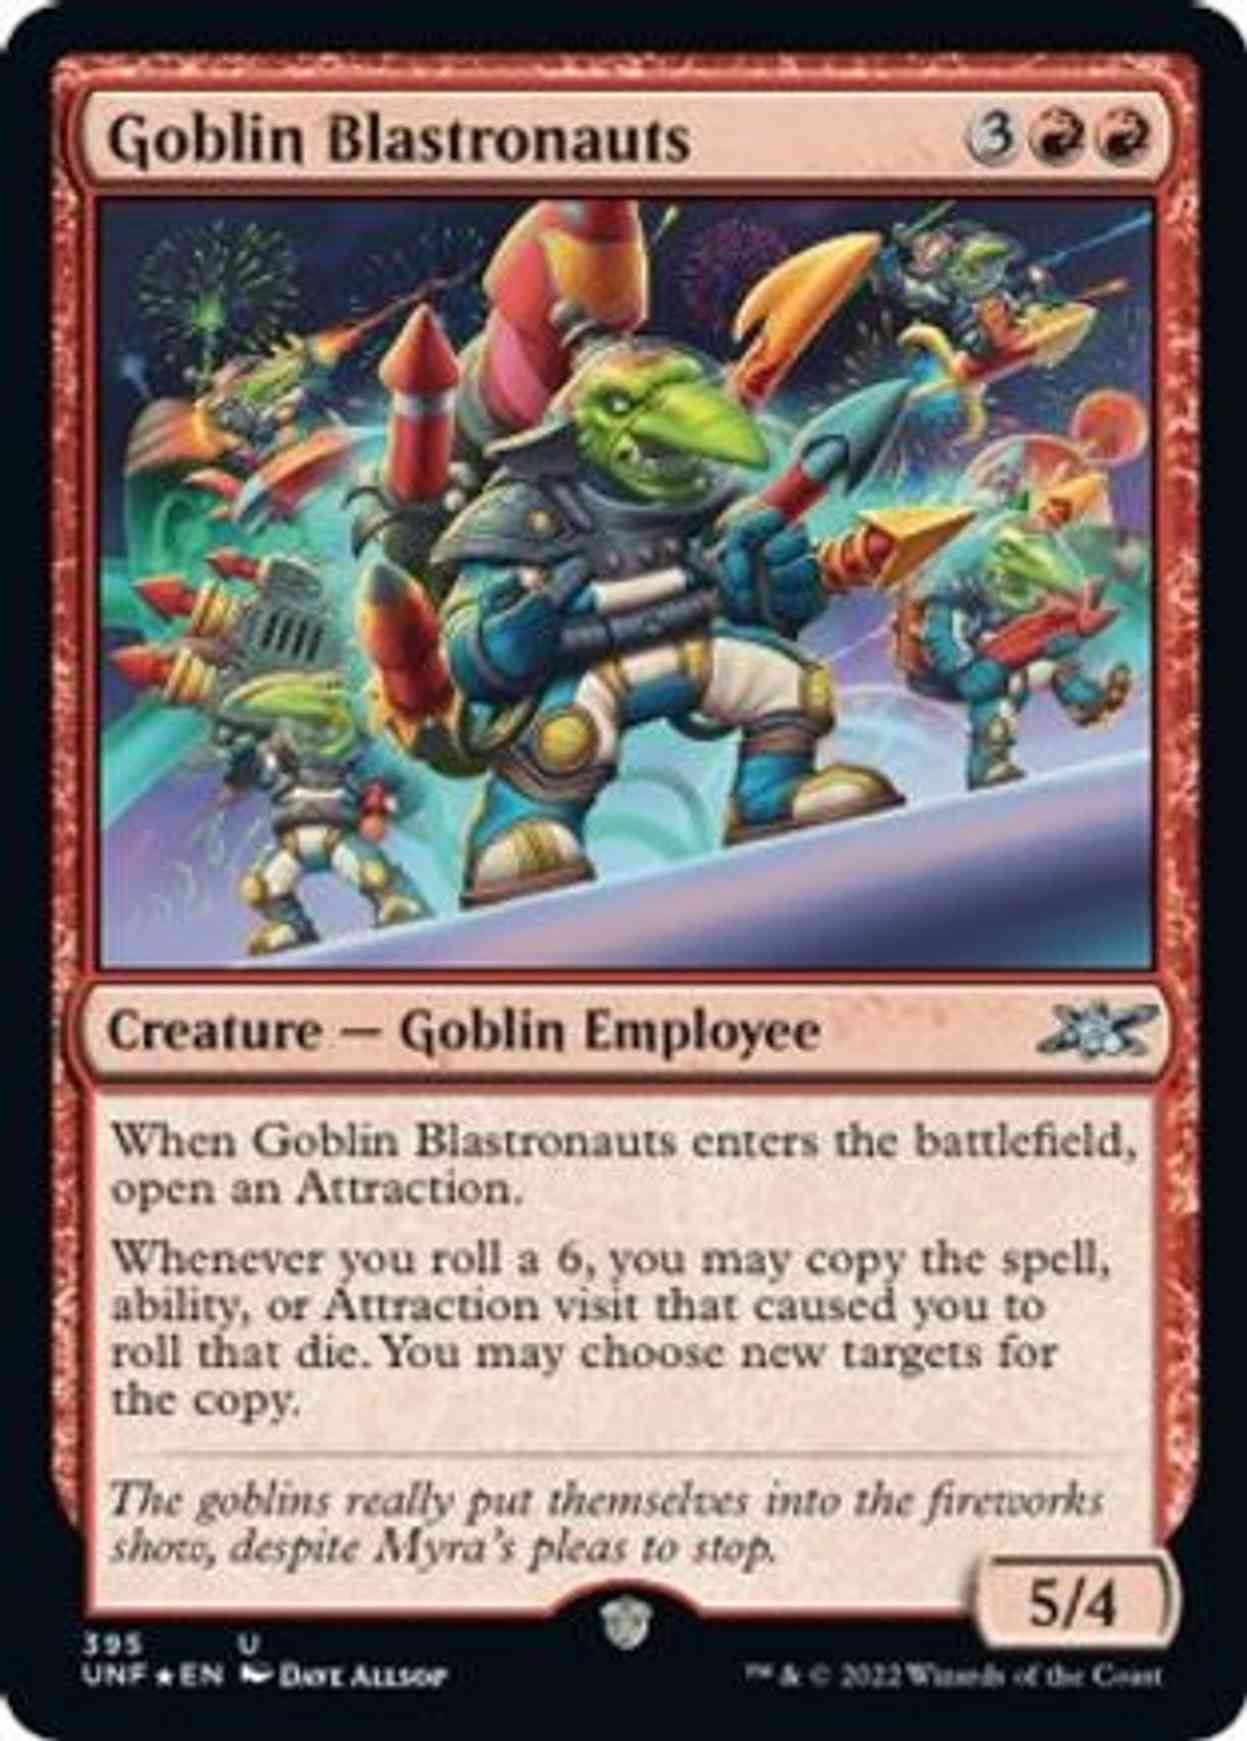 Goblin Blastronauts (Galaxy Foil) magic card front